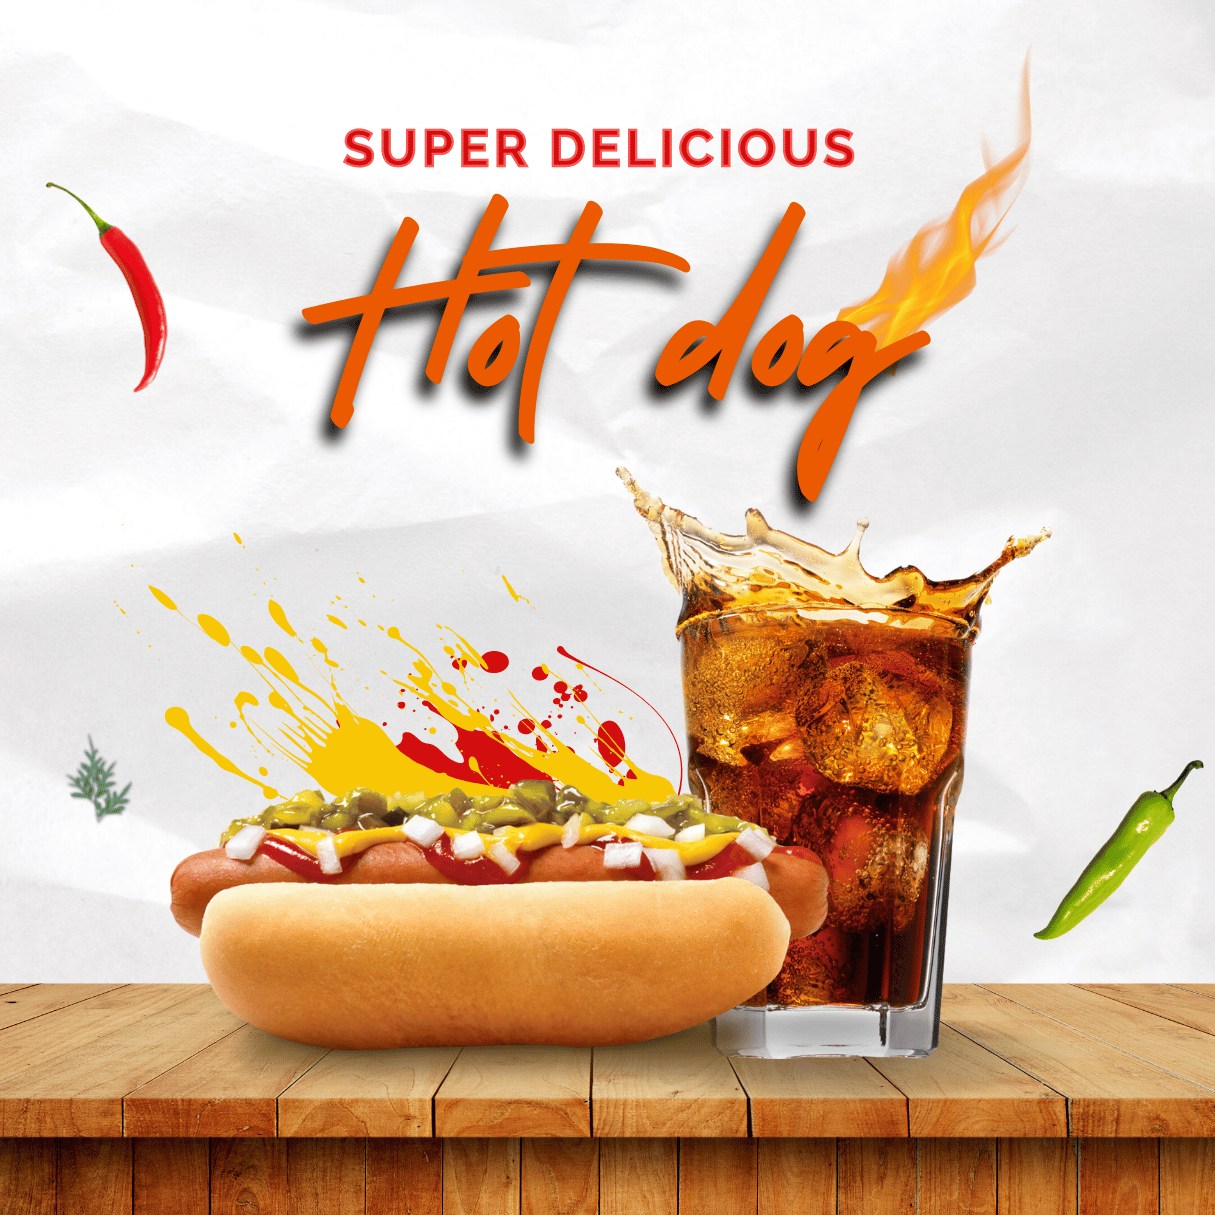 Super Hot Dog preview image.